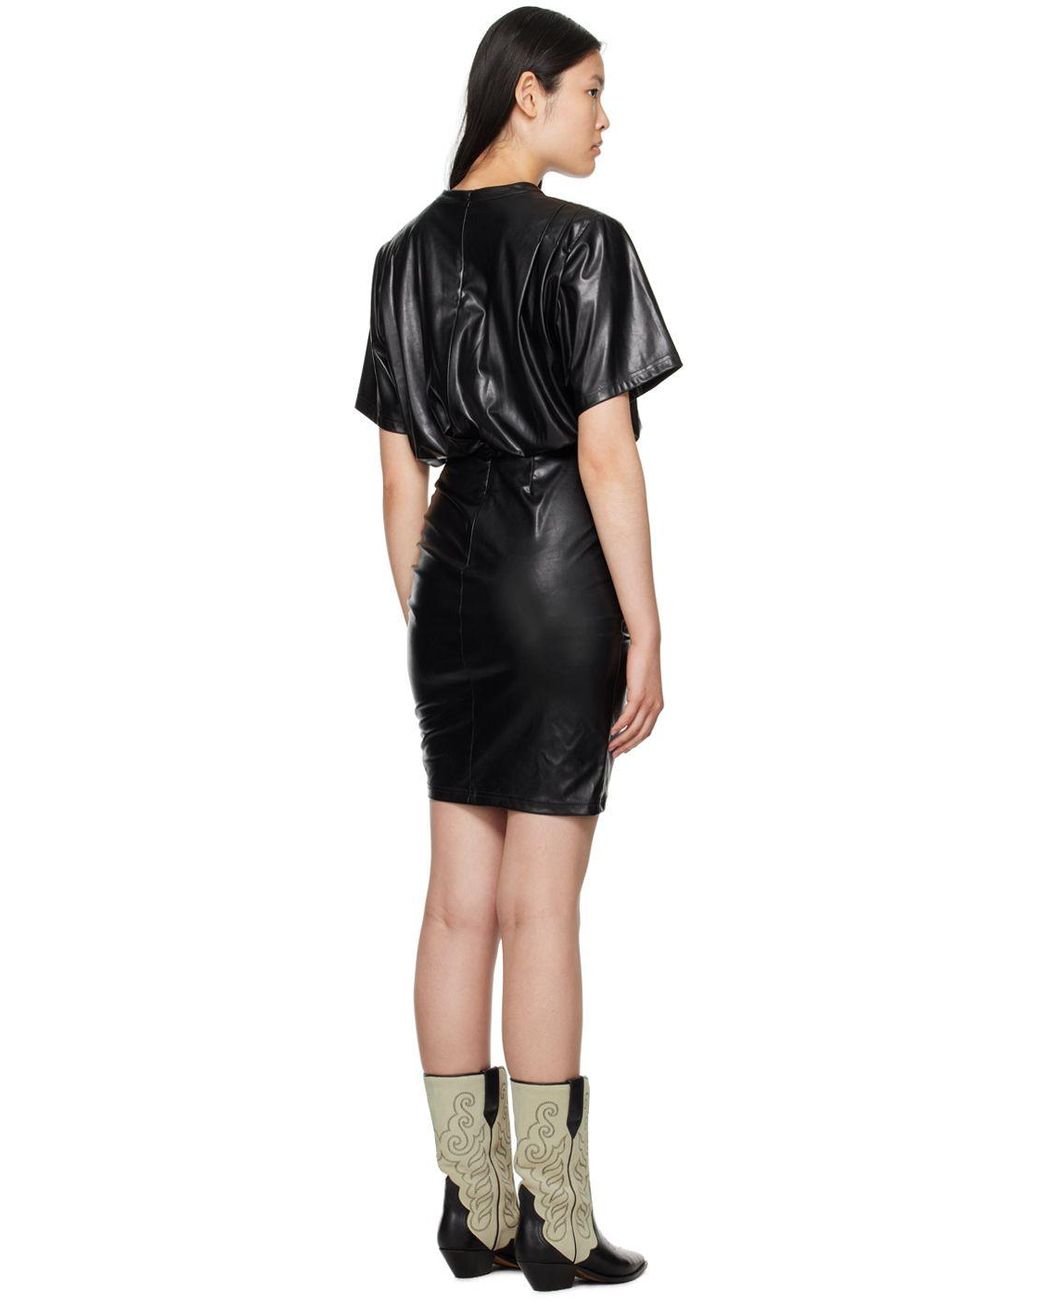 Lilica Strapless Corset Vegan Leather Top in Black